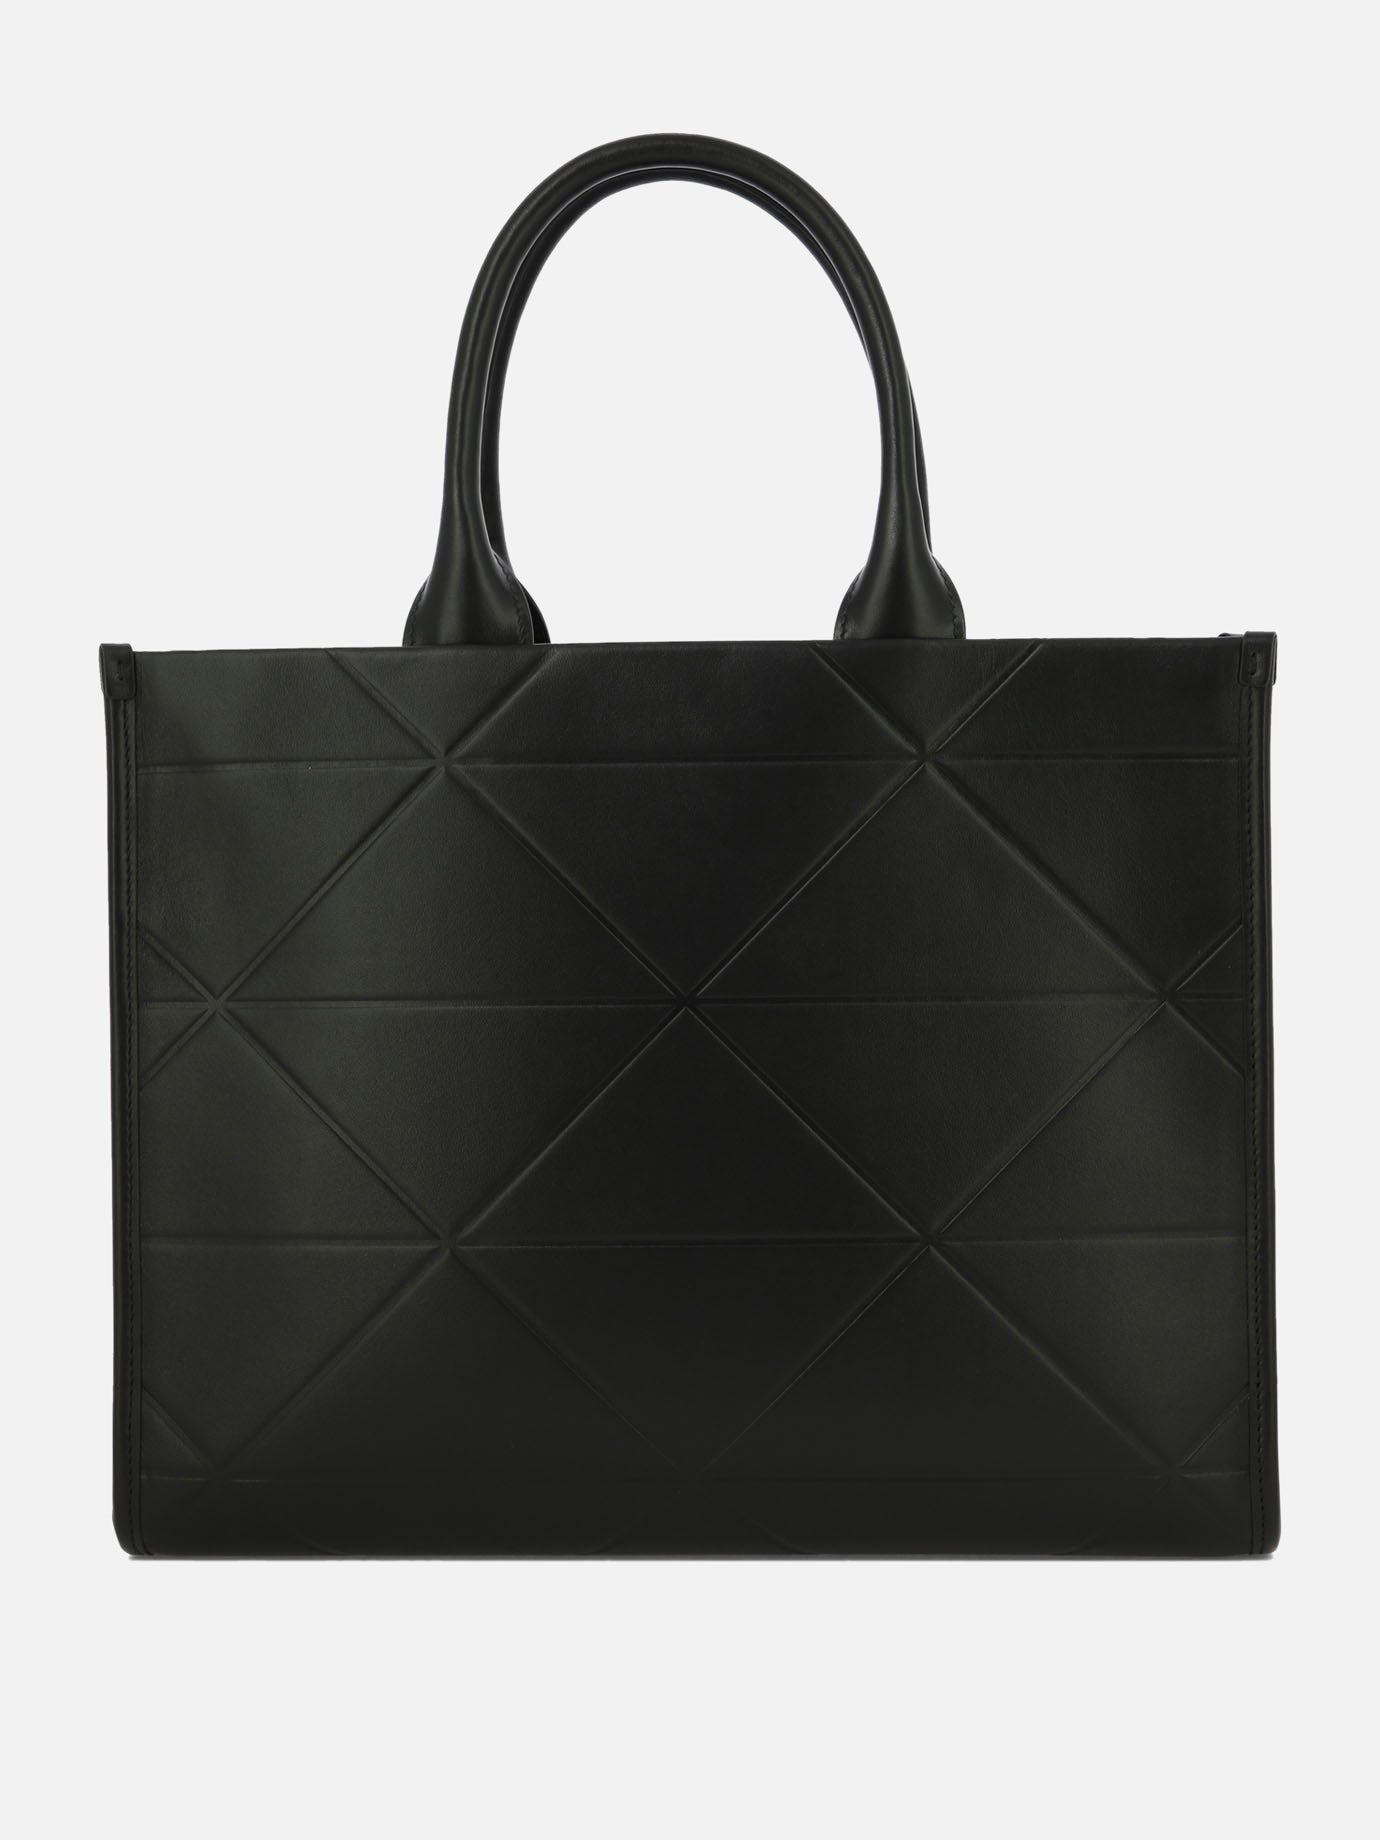 "Prada Symbole" handbag